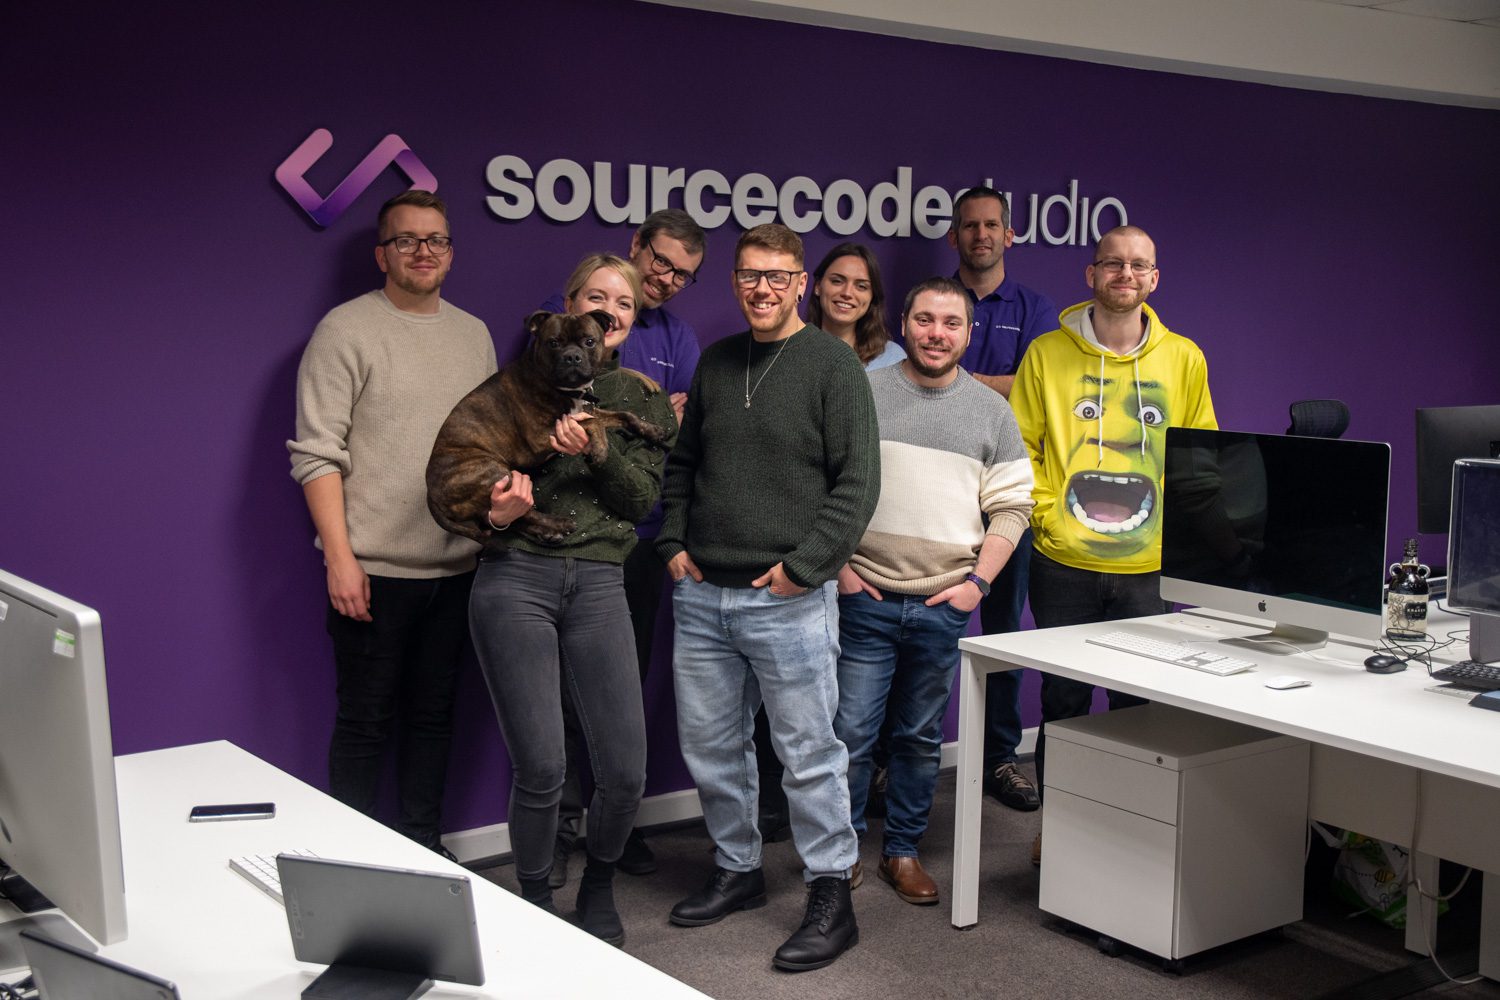 SourceCodeStudio full team picture in the studio